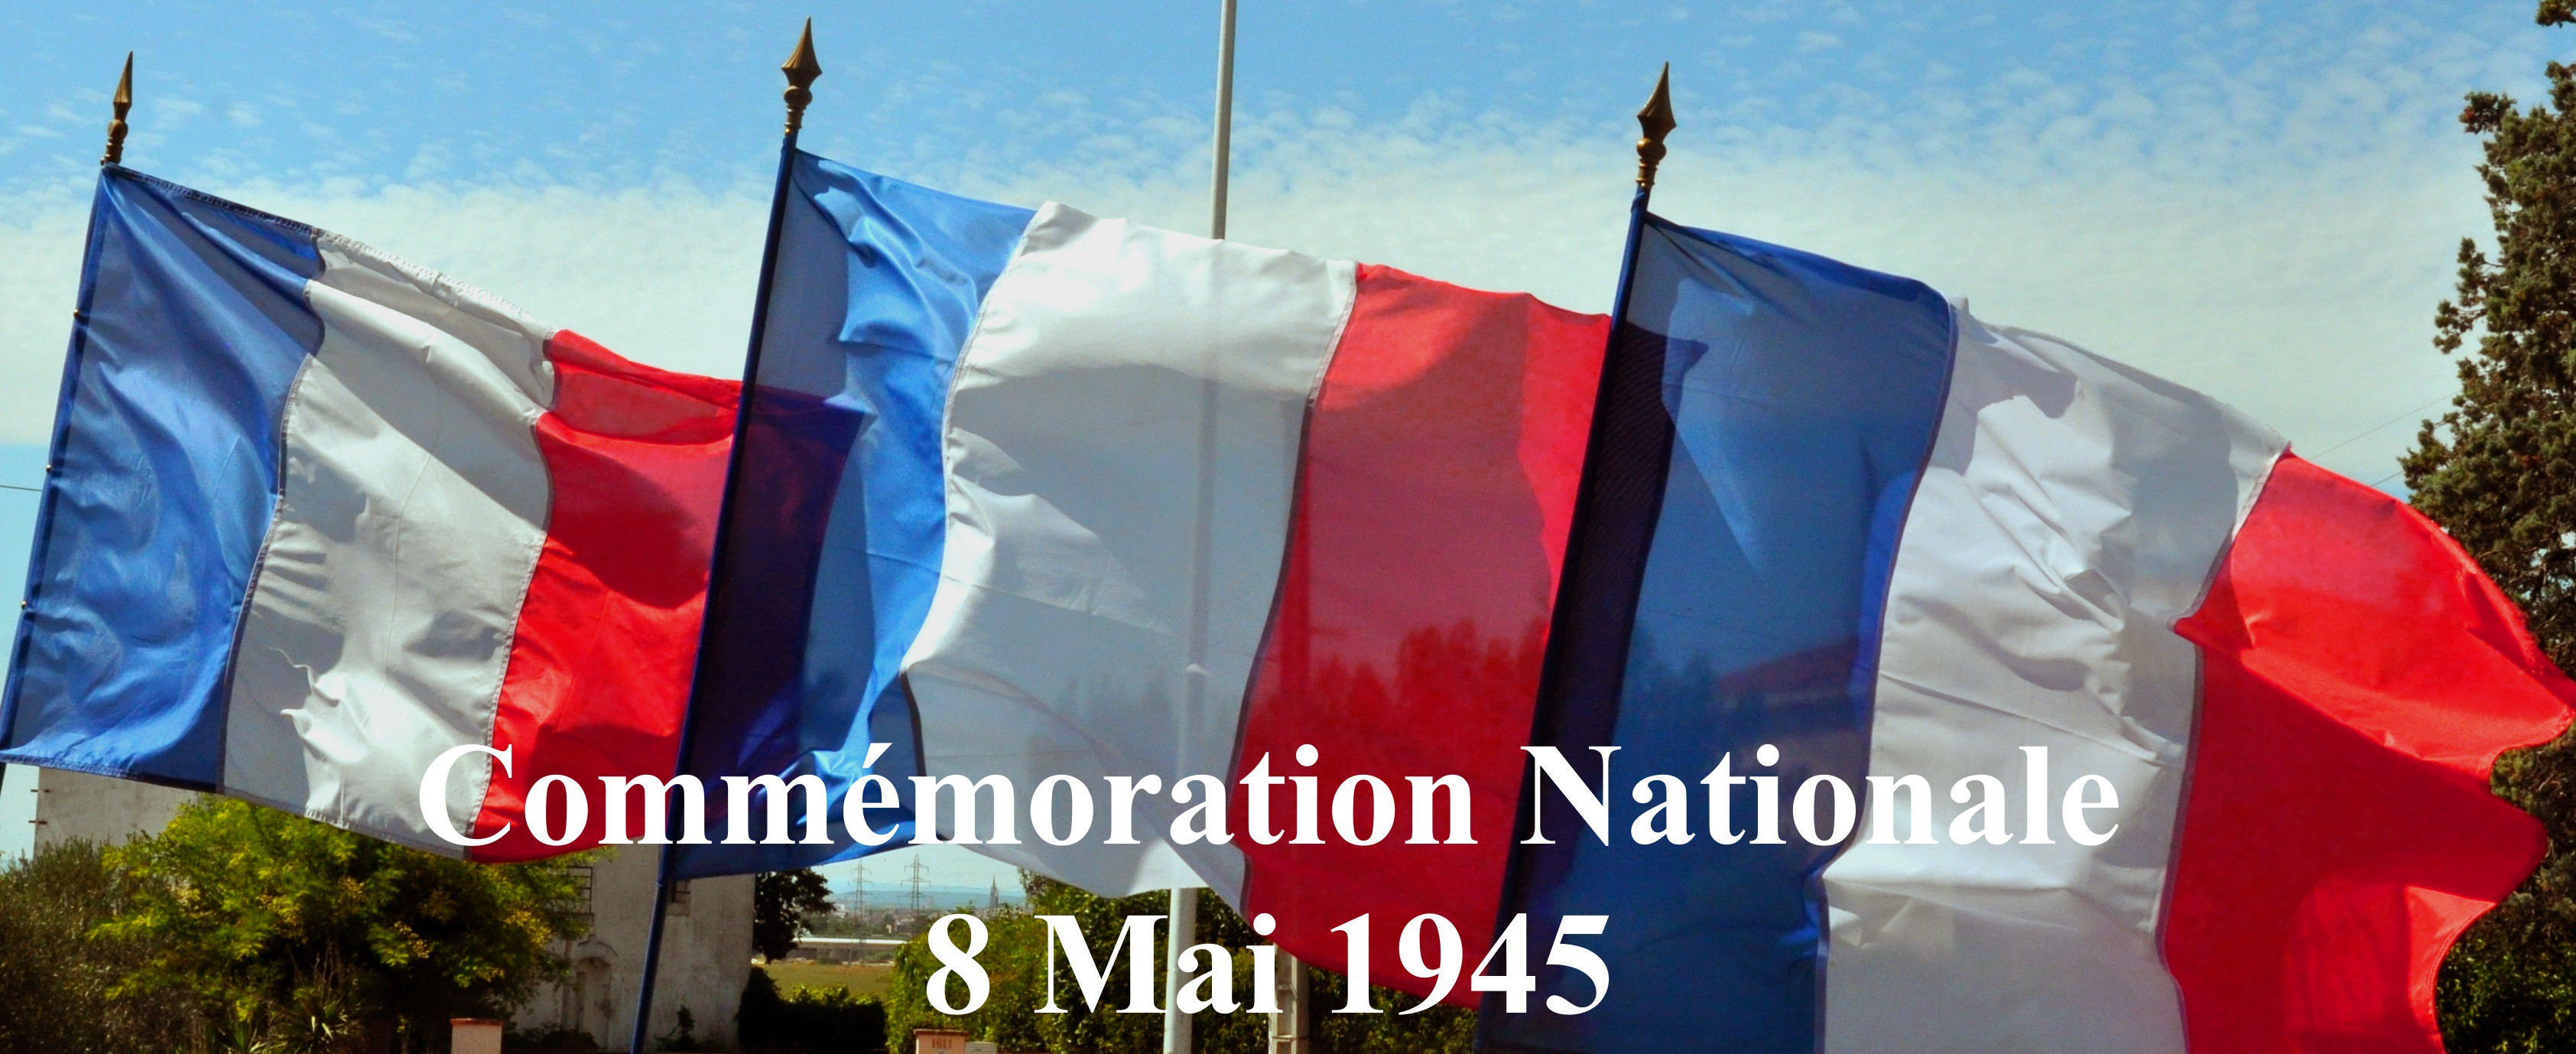 commemoration du 8 mai 1945